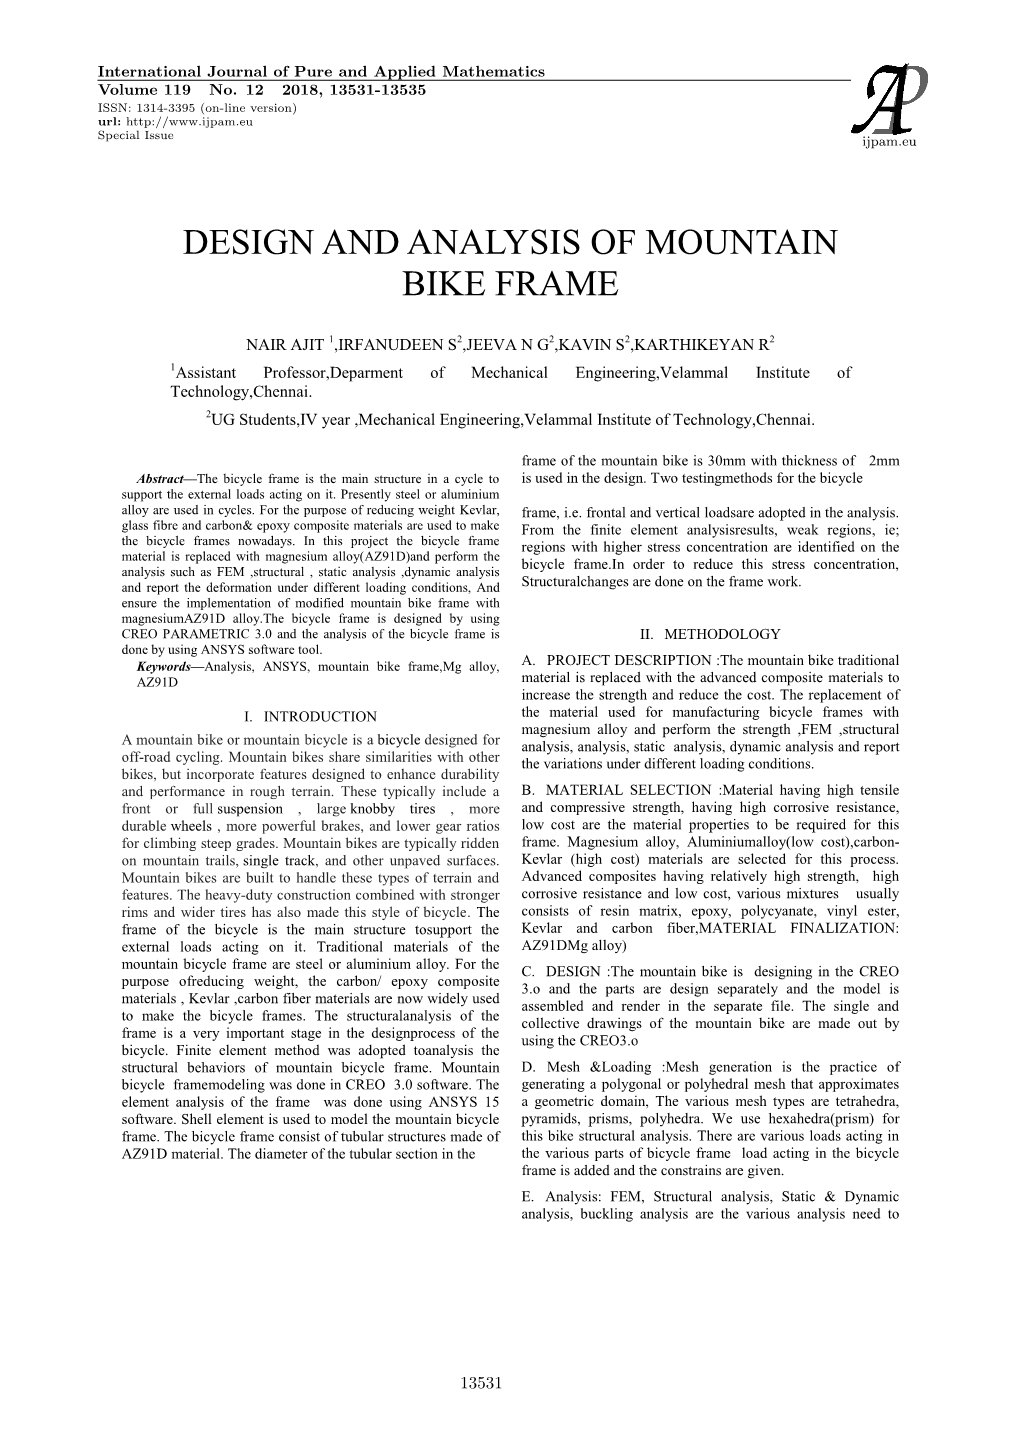 Design and Analysis of Mountain Bike Frame